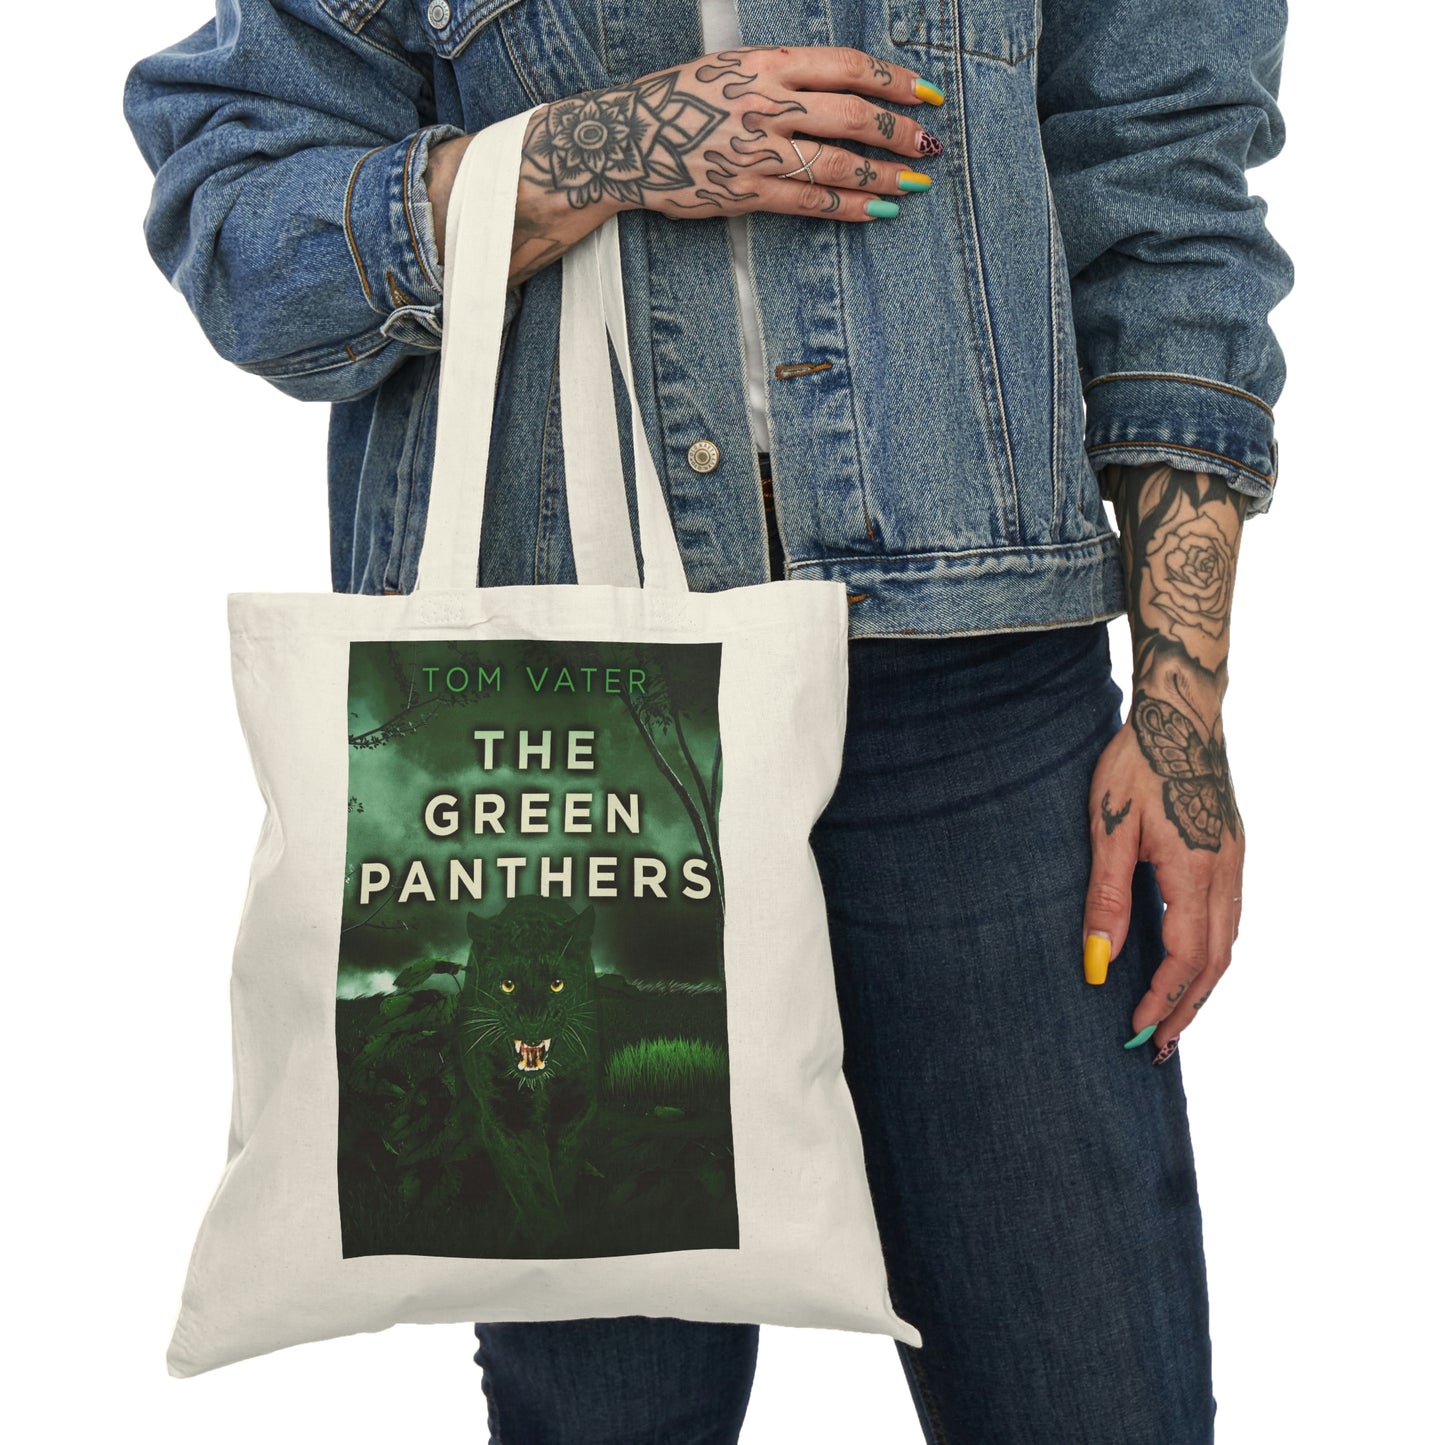 The Green Panthers - Natural Tote Bag